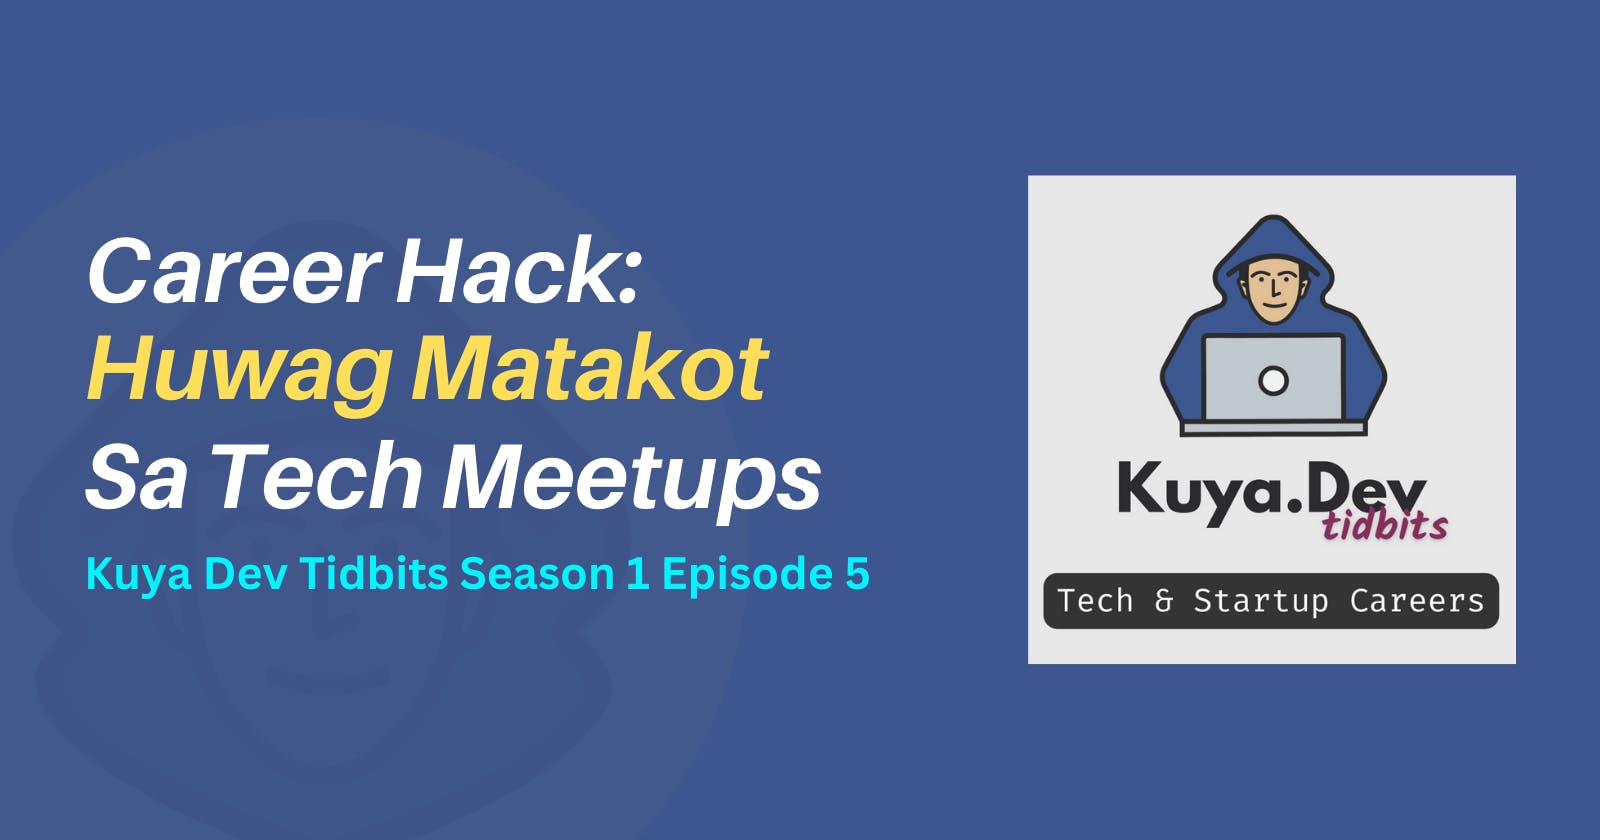 Career Hack: Huwag Matakot sa Tech Meetups